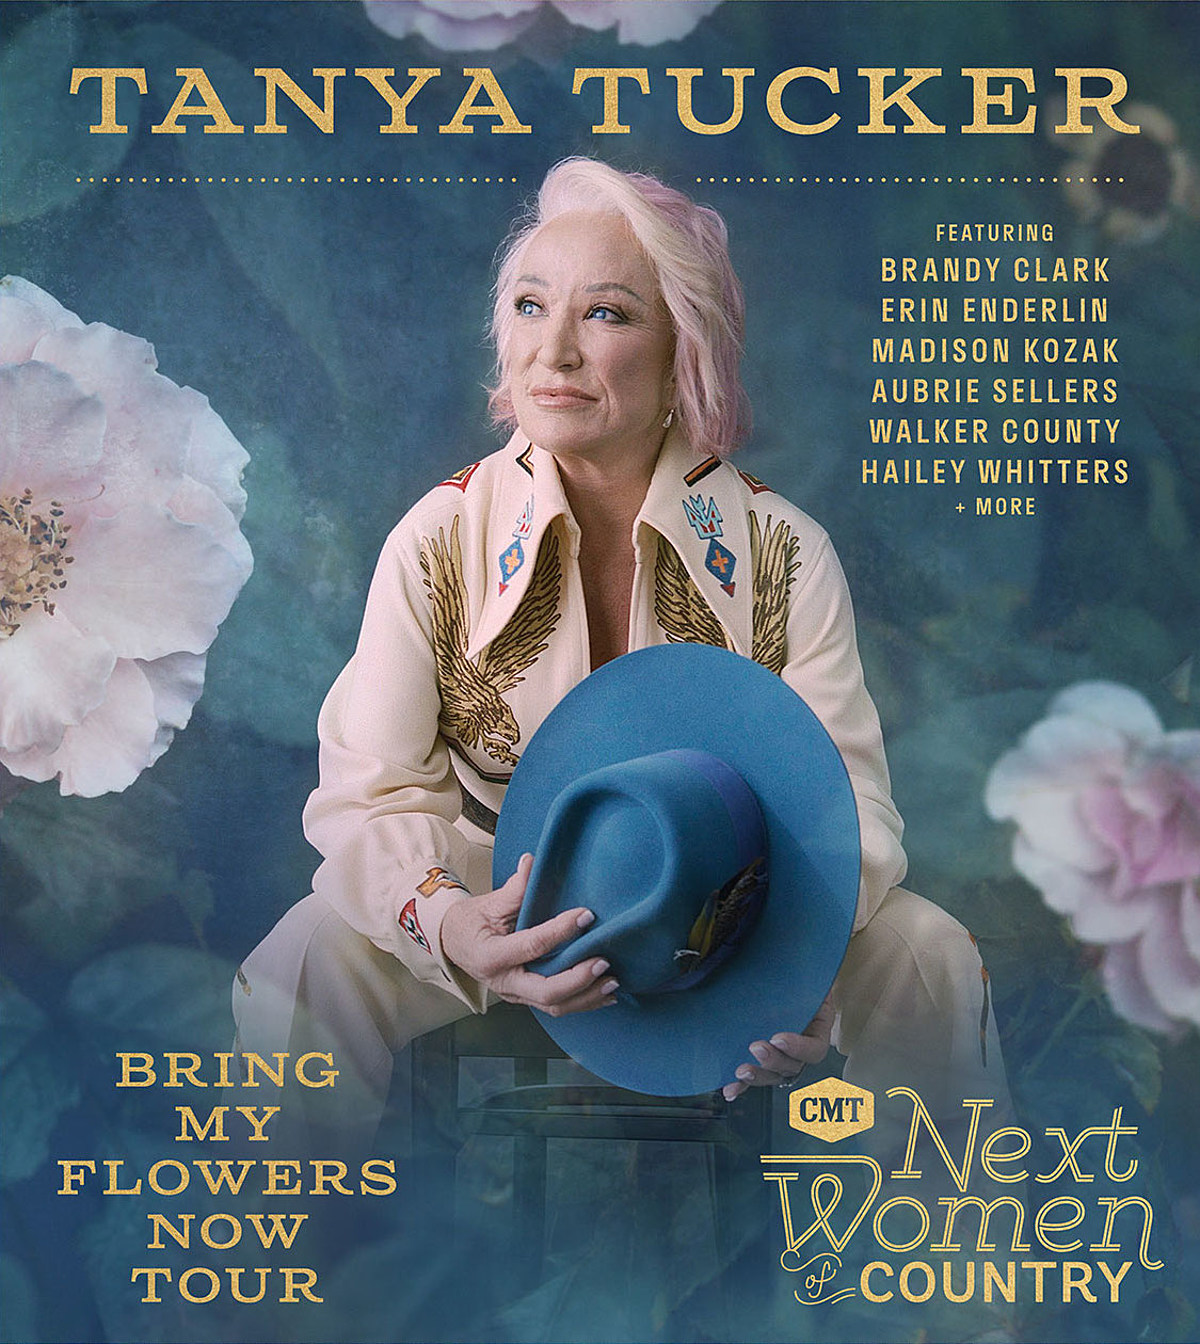 Tanya Tucker headlining 2020 CMT Next Women of Country tour.